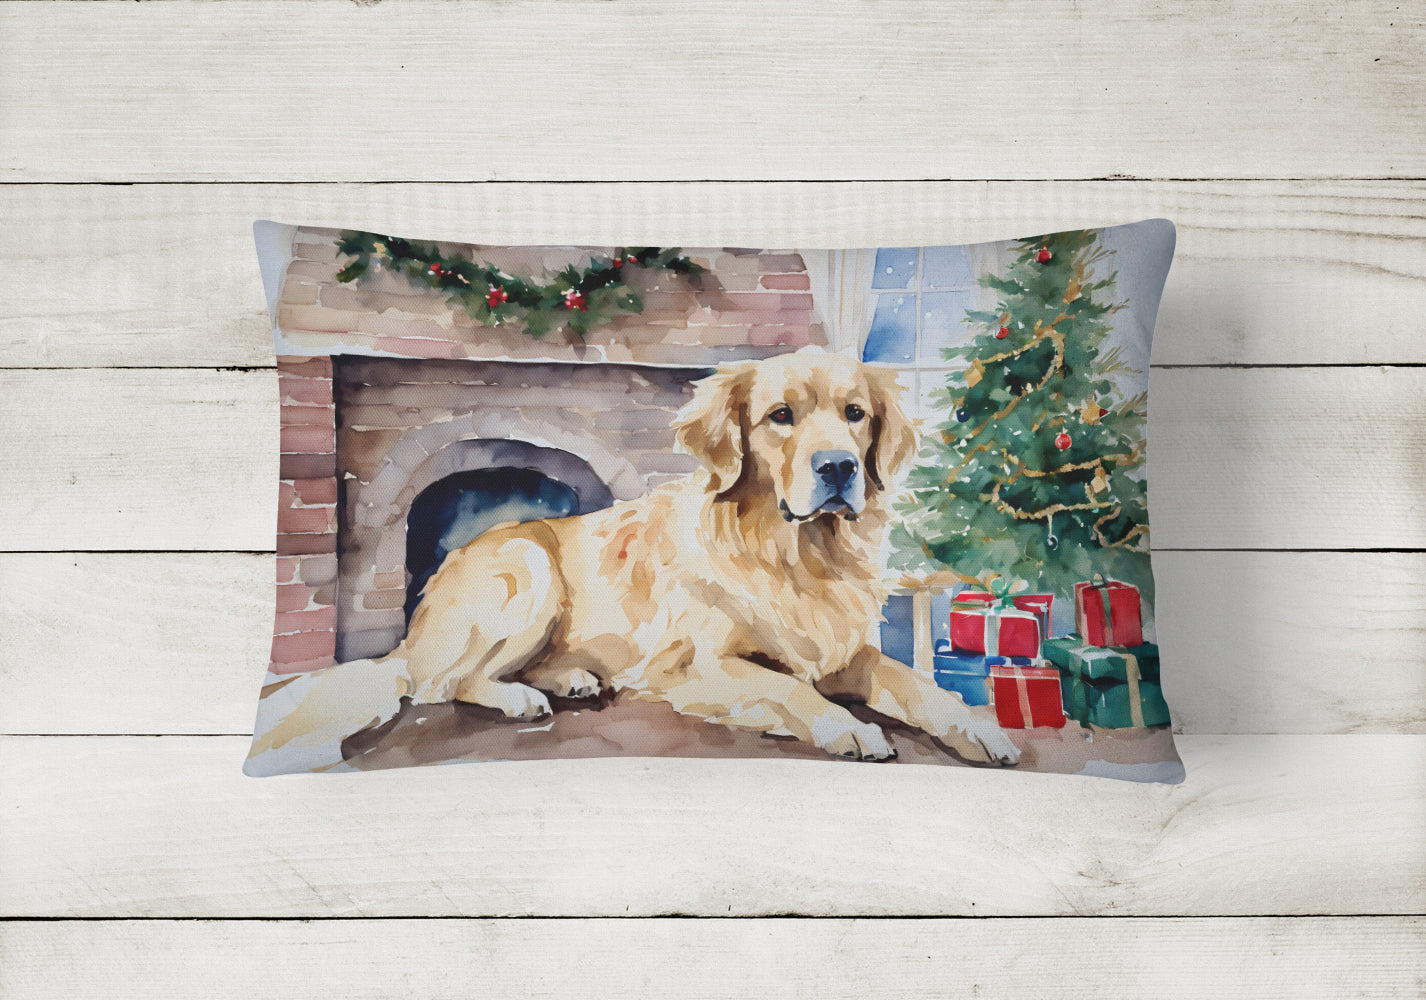 Buy this Golden Retriever Cozy Christmas Throw Pillow